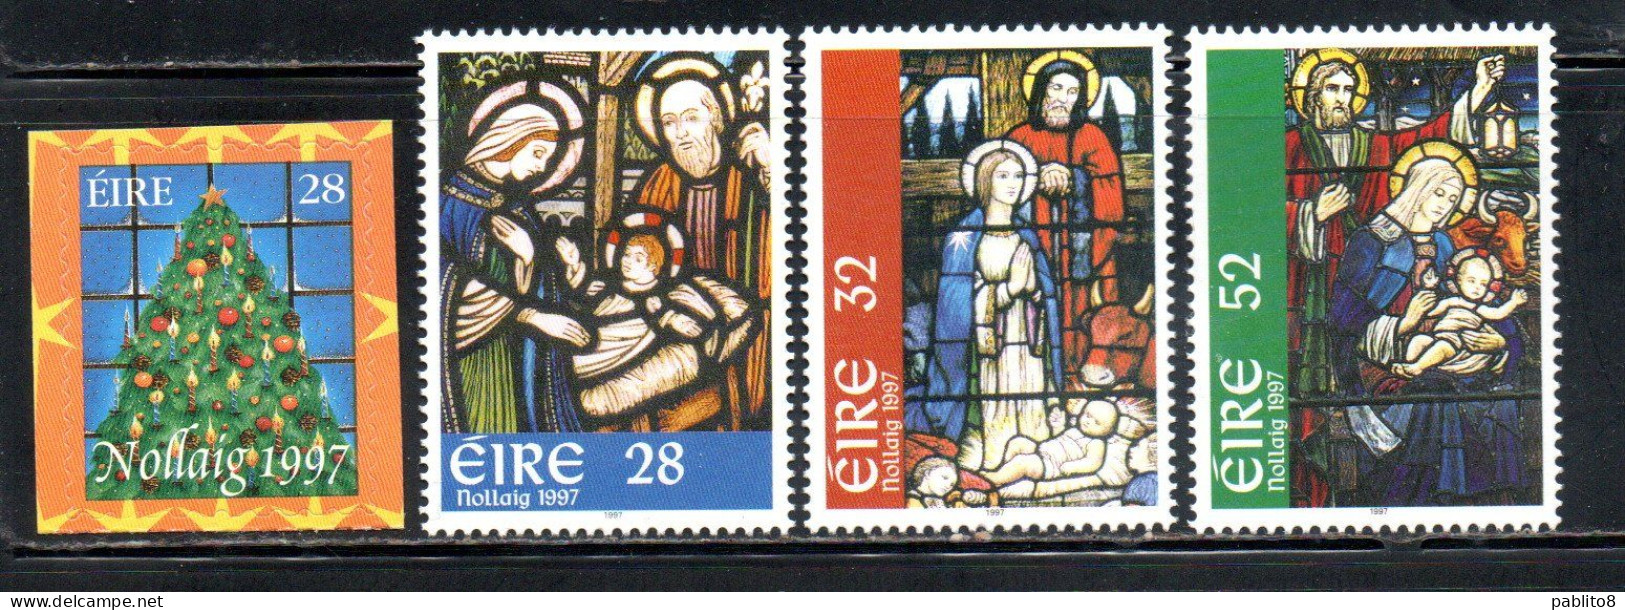 EIRE IRELAND IRLANDA 1997 CHRISTMAS ANNUNCIATION NOLLAIG NATALE NOEL WEIHNACHTEN NAVIDAD COMPLETE SET SERIE COMPLETA MNH - Unused Stamps